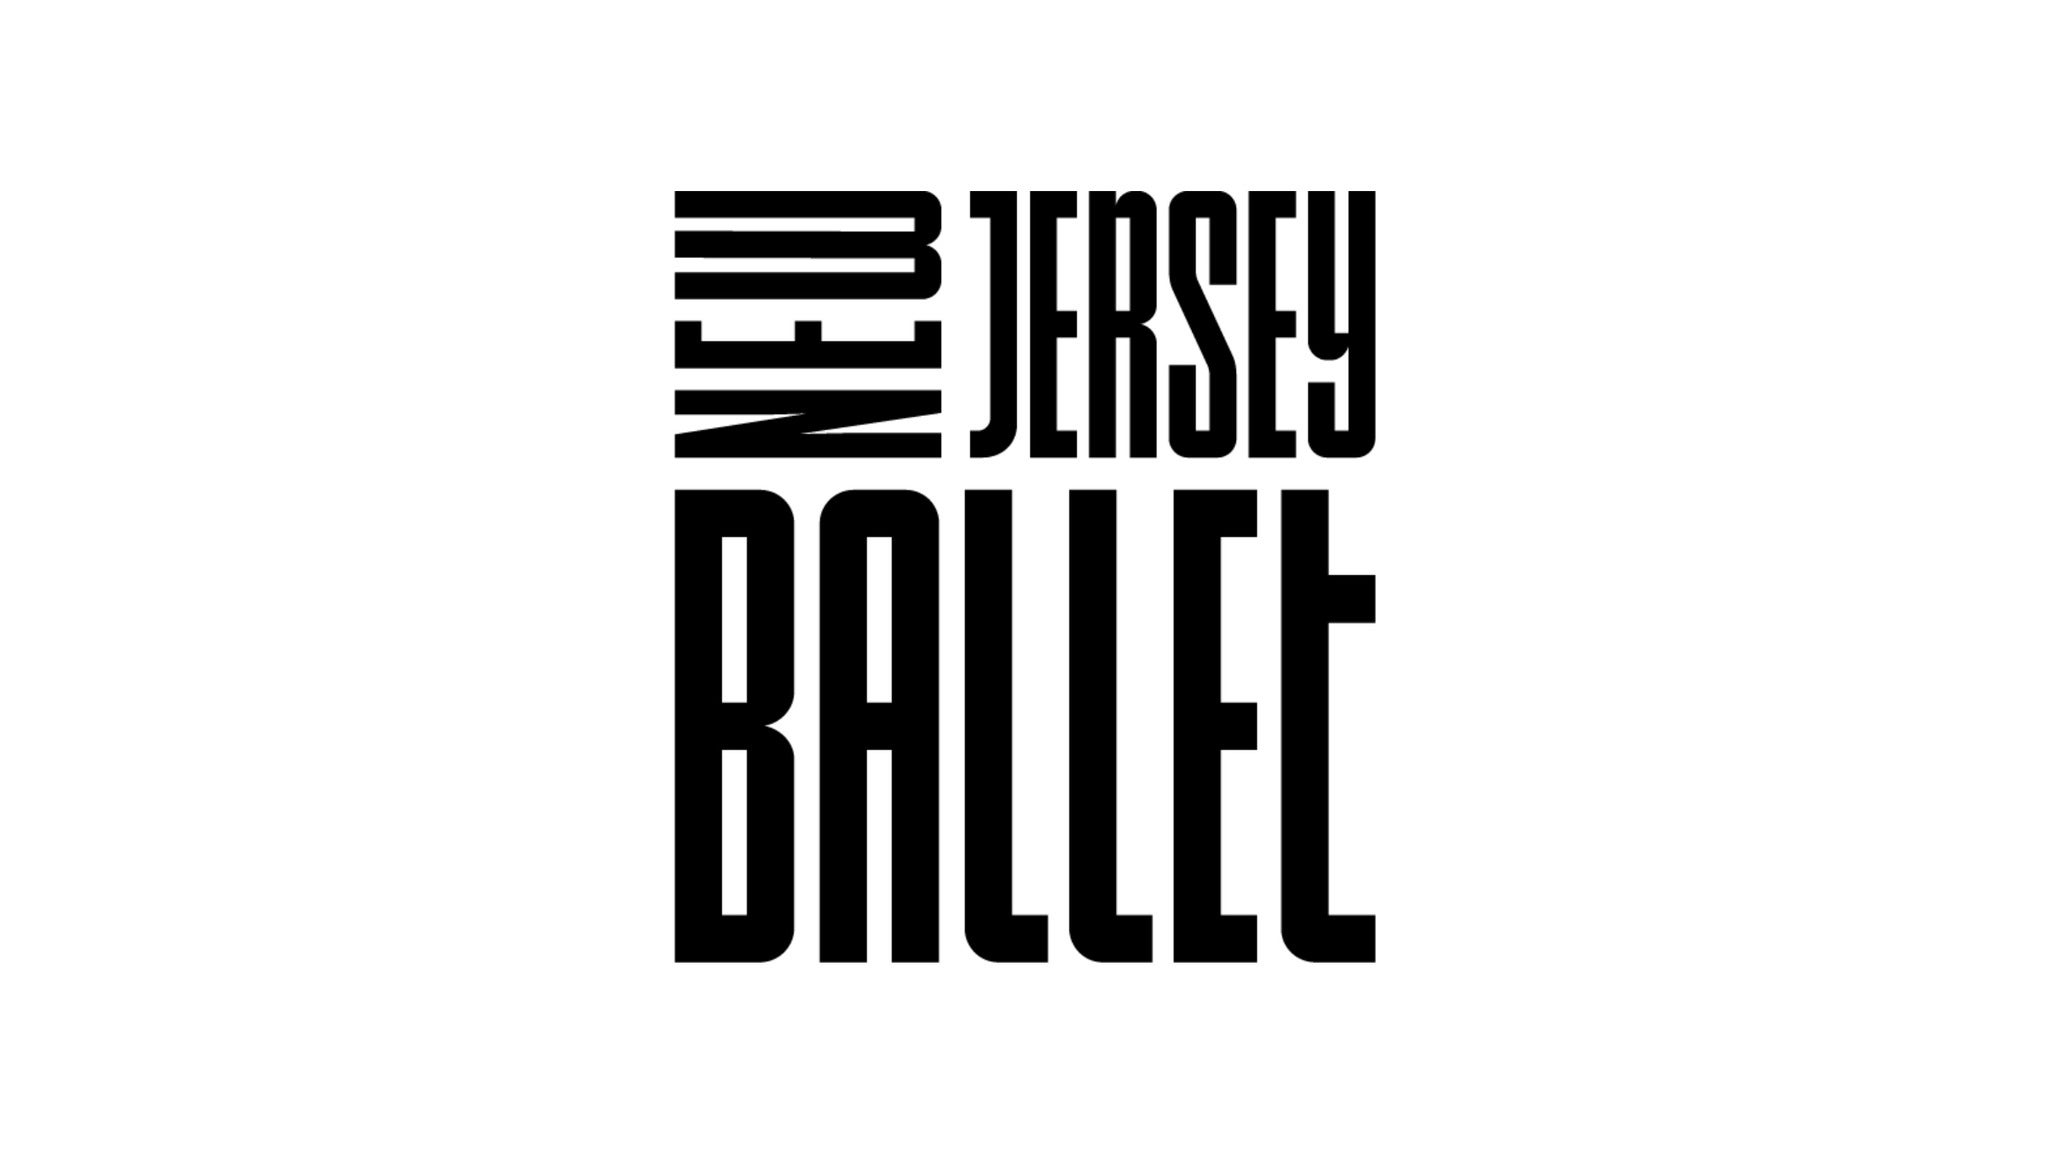 New Jersey Ballet Company